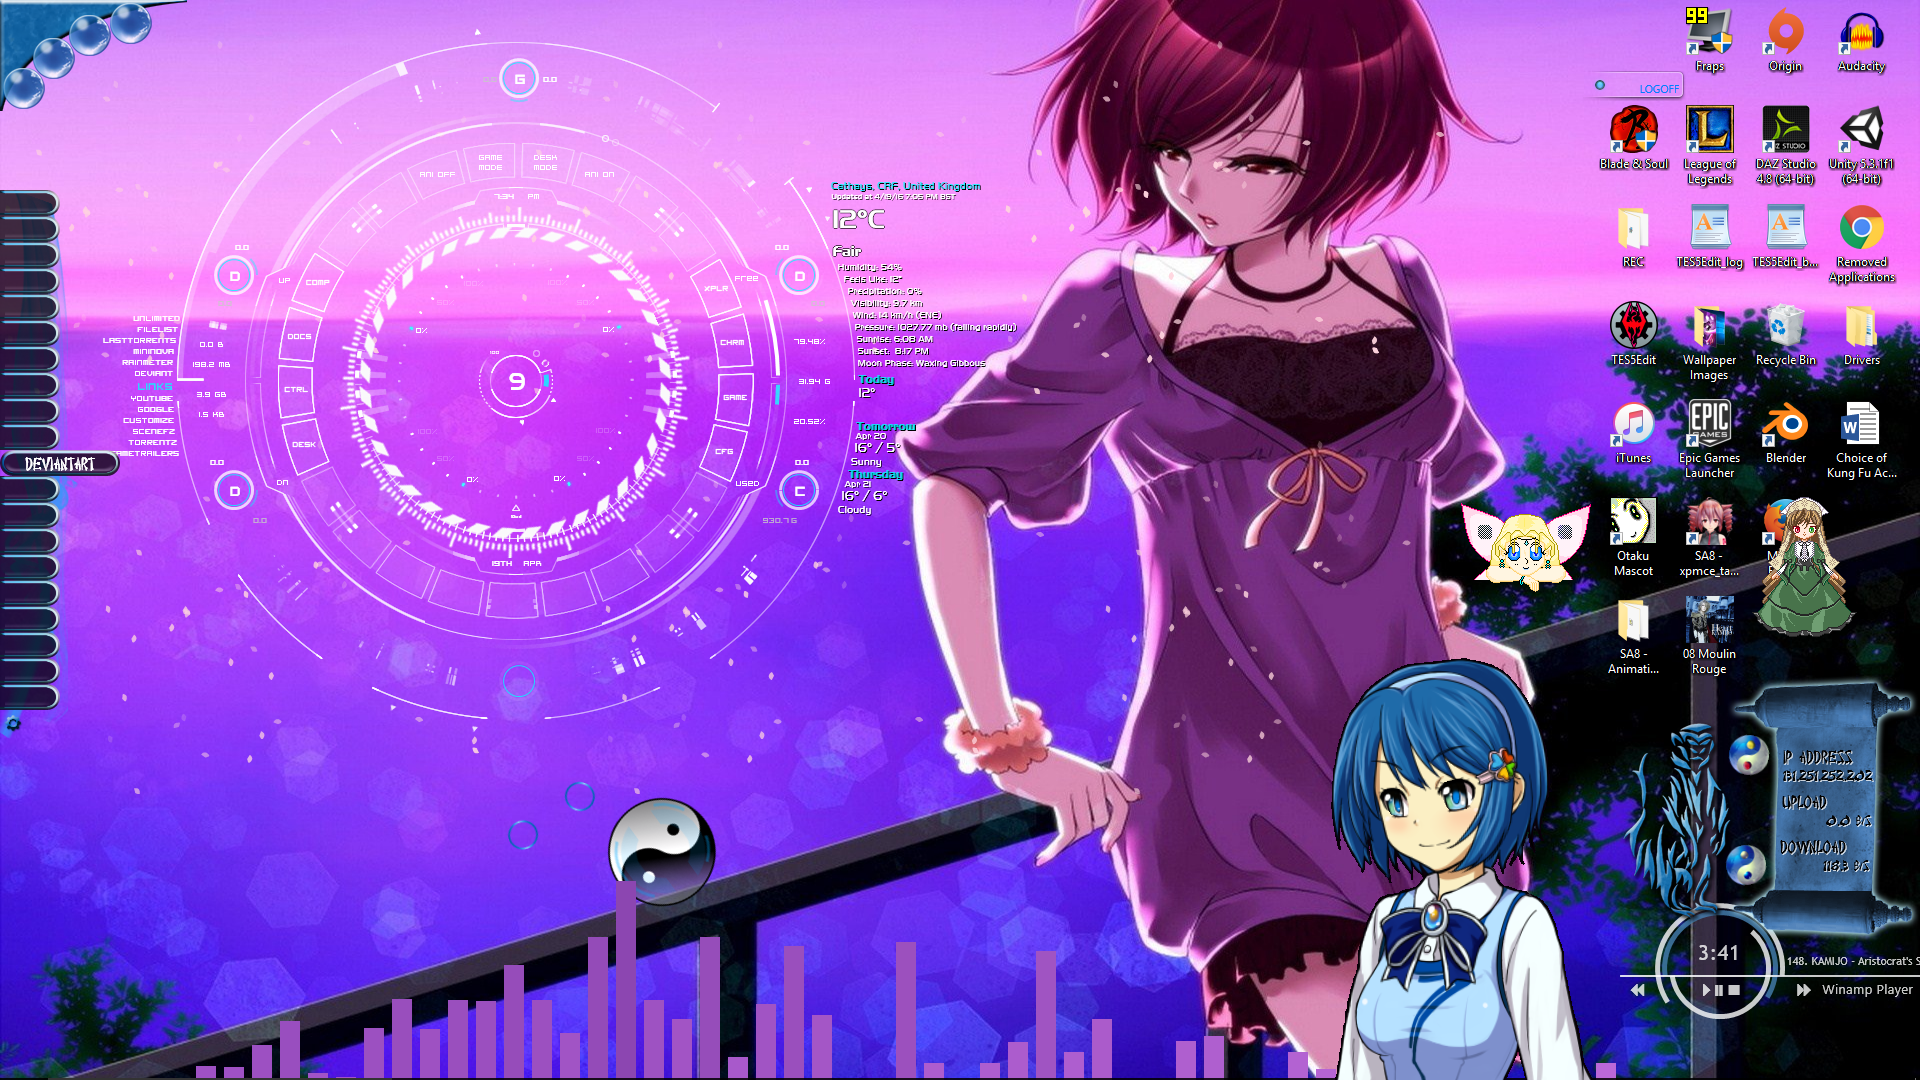 Purple Anime Theme Rainmeter Layout By Scopt1 On Deviantart